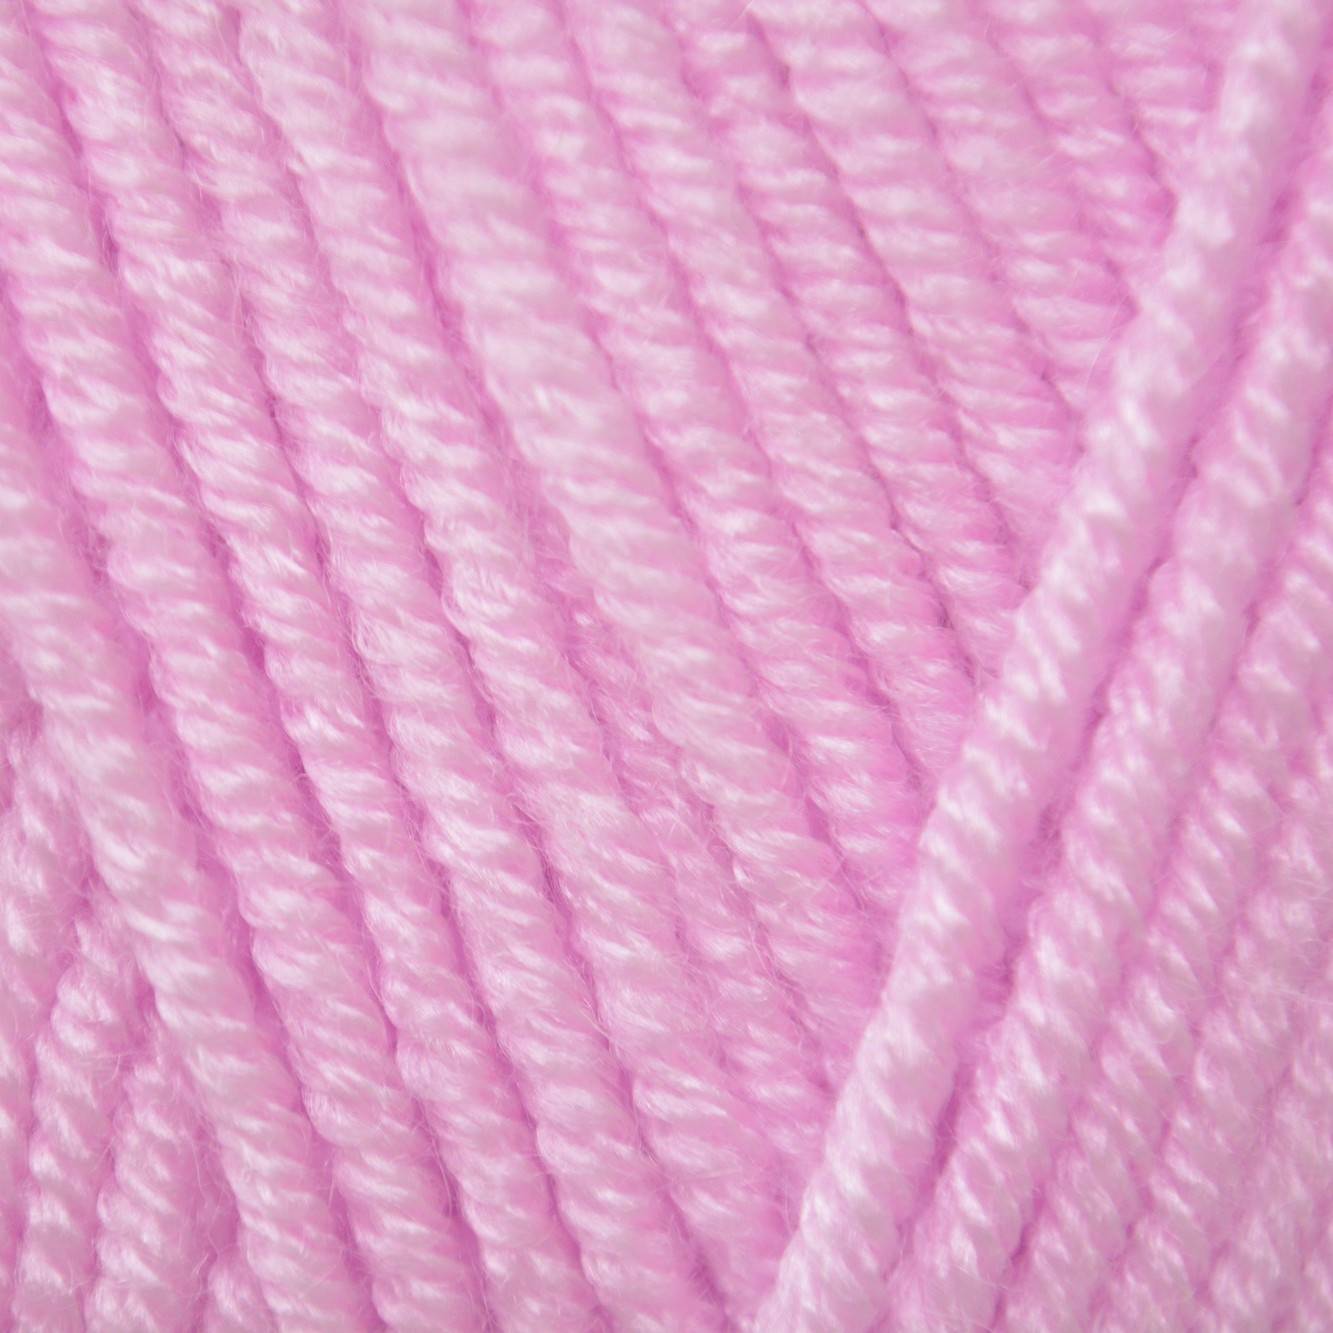 King Cole Cherished DK - Powder Pink (3197) | The Knitting Network